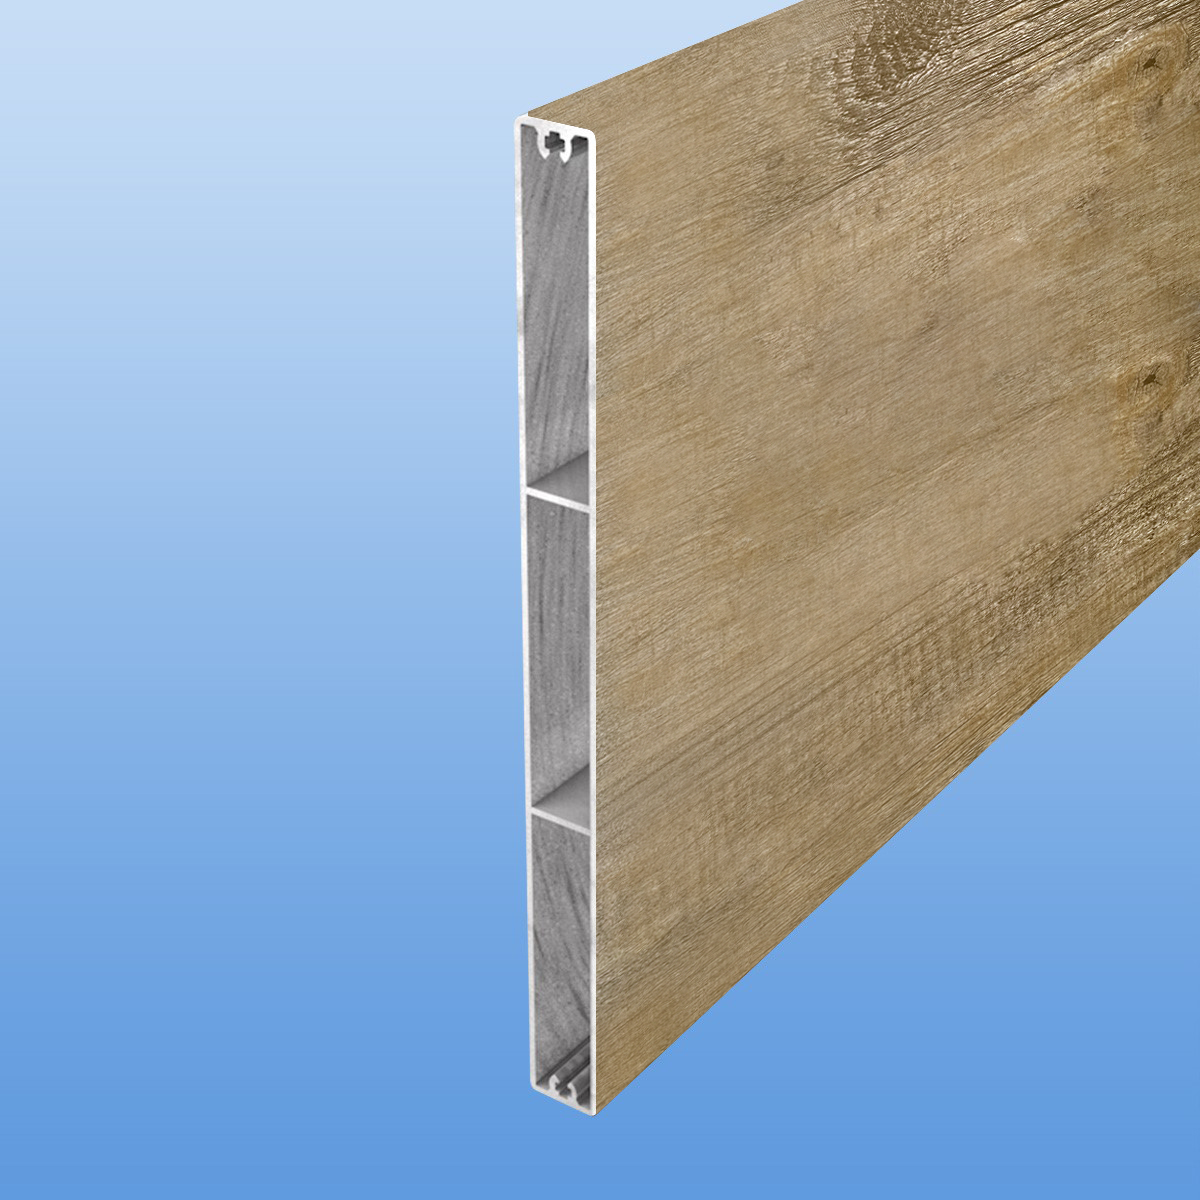 Balkonbretter aus Aluminium 200 mm breit in Holzoptik "Treibholz"